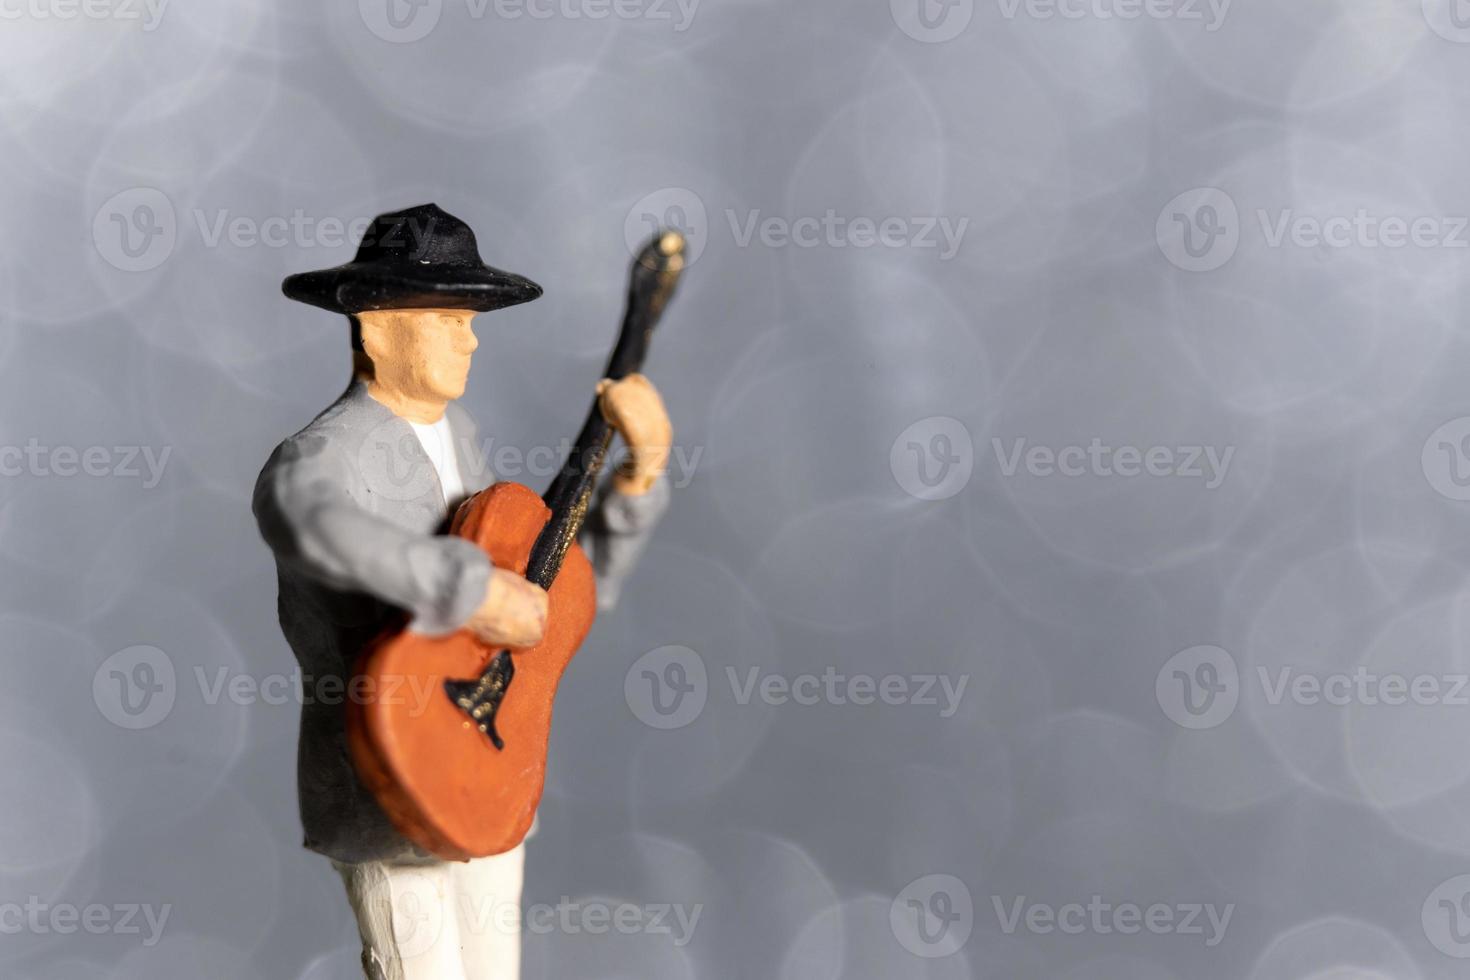 miniatyrmusiker med gitarr på bokeh bakgrund foto